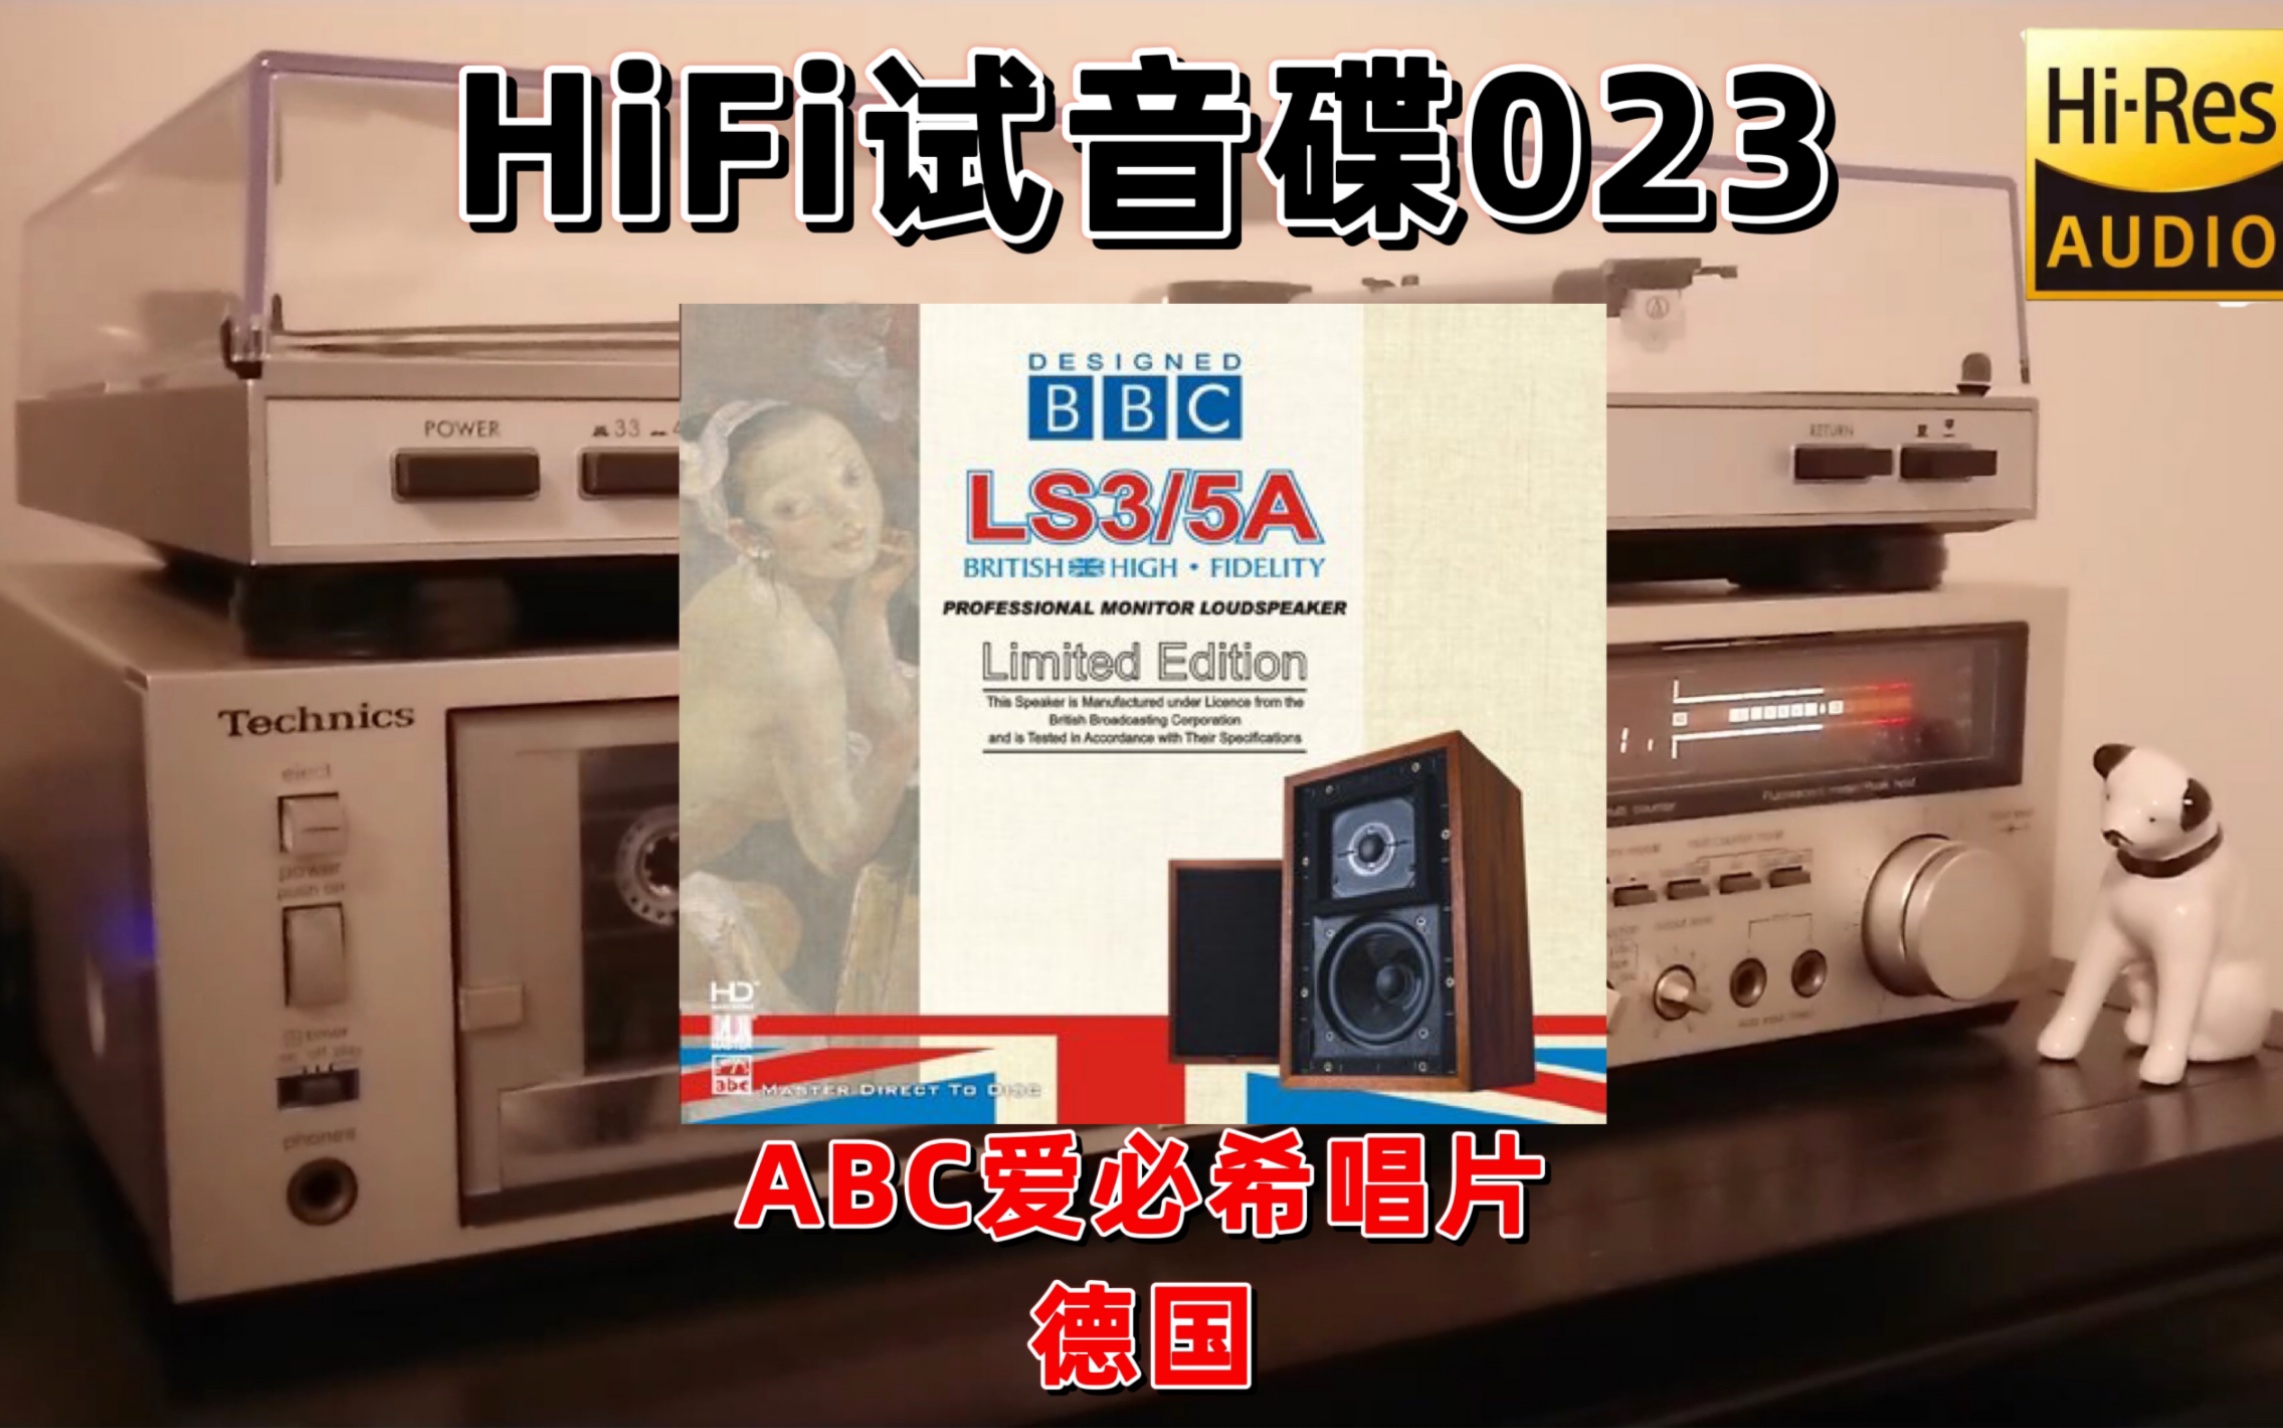 #HiFi试音碟023#美之声LS/35A扬声器试音碟 2009 发烧碟 示范碟 测试碟 煲机碟 试机碟